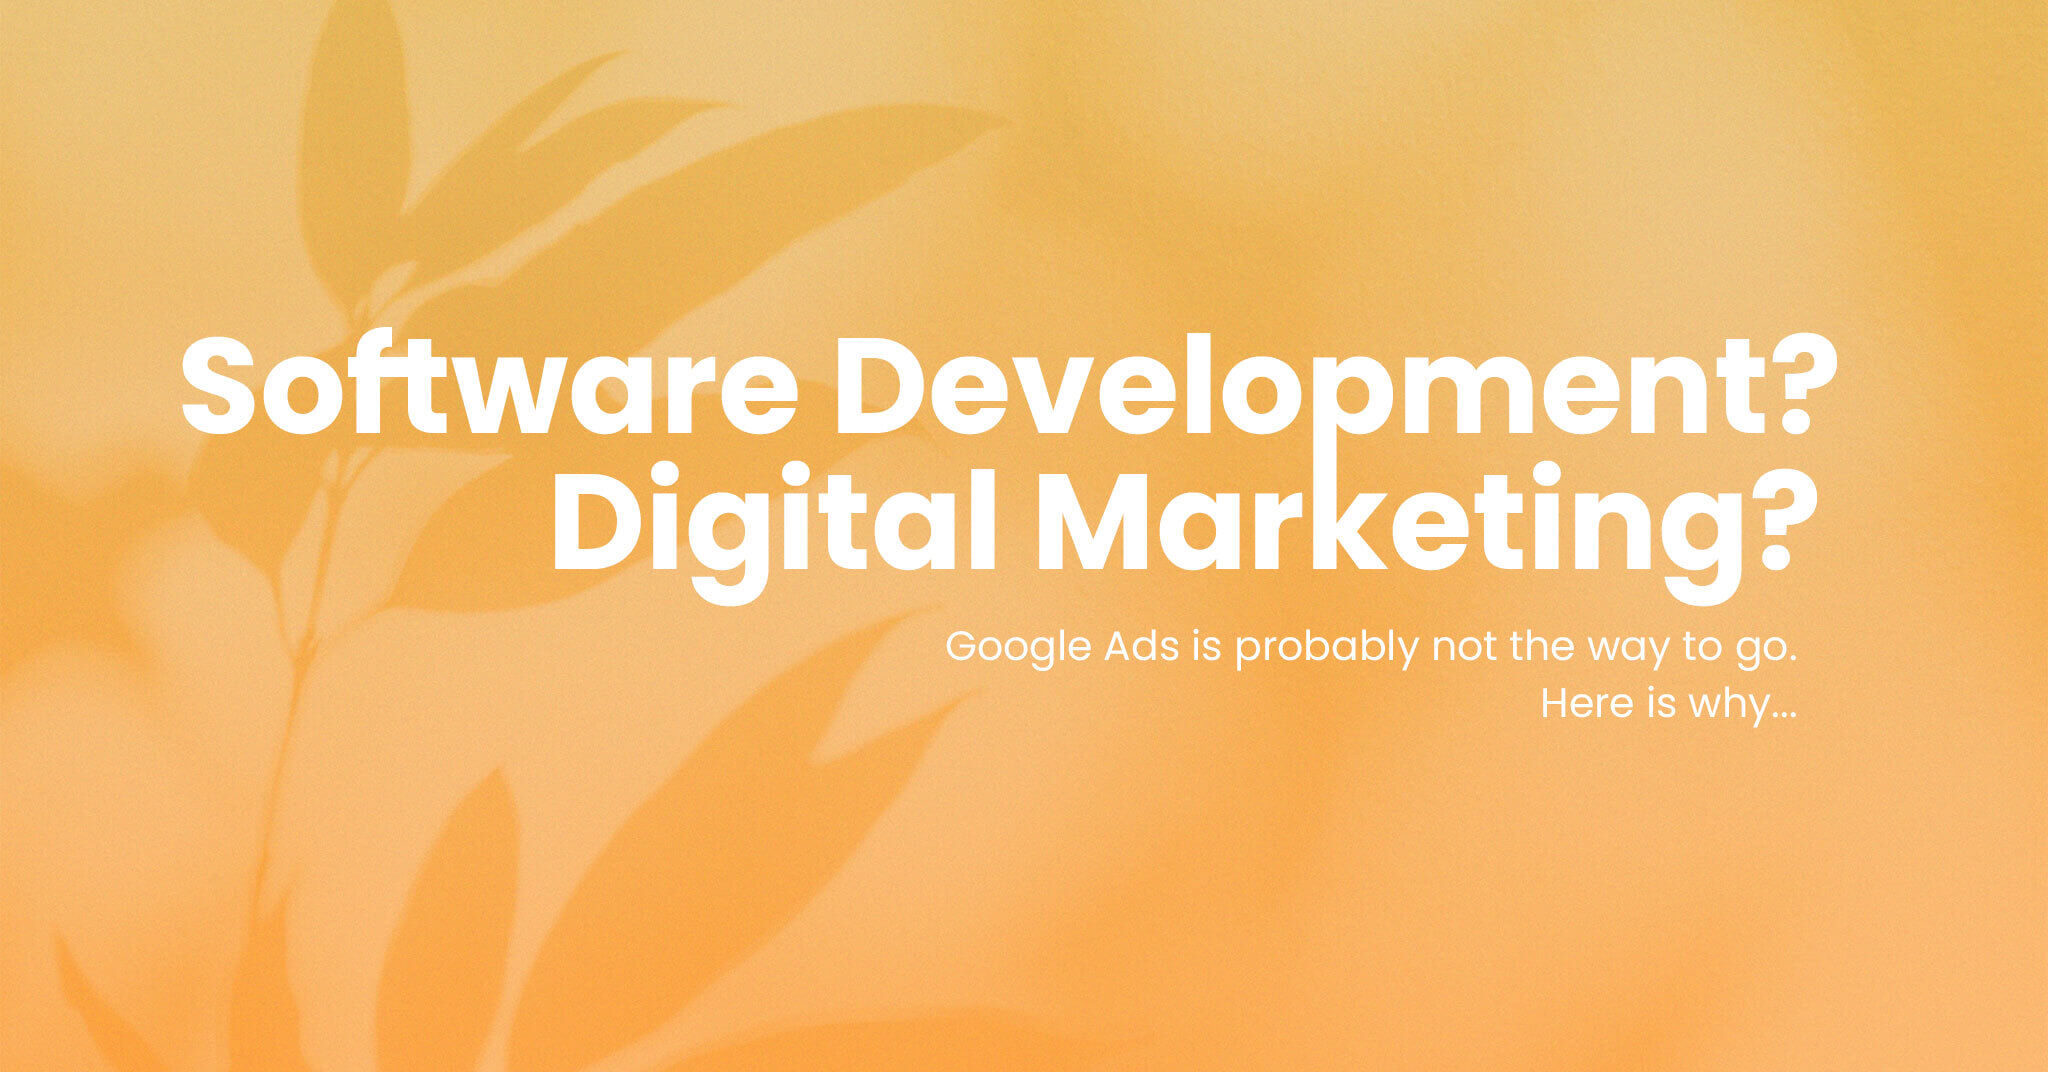 Google Ads in software development or digital marketing